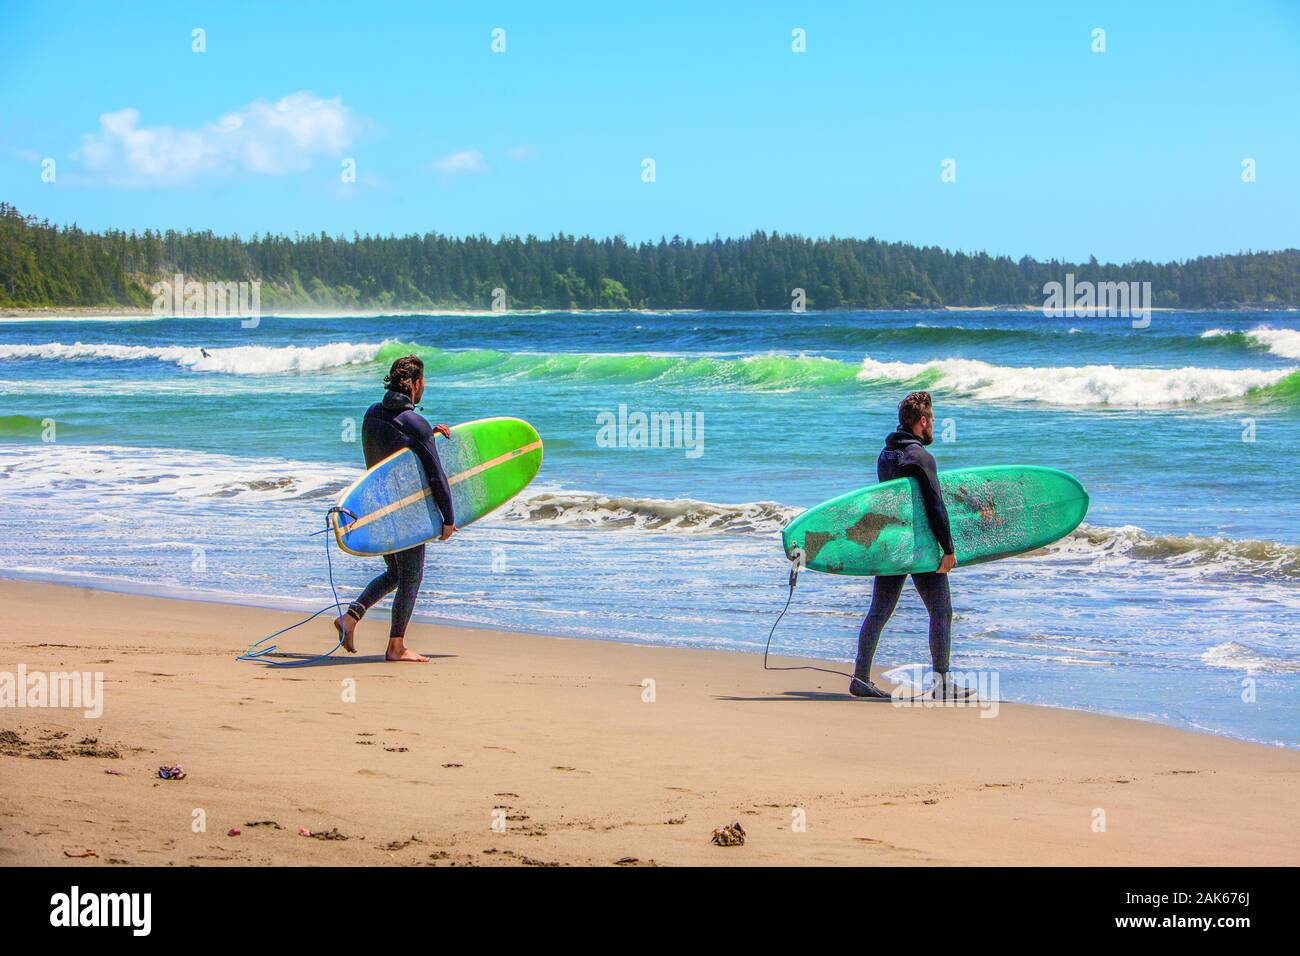 British Columbia/Vancouver Island: Surfer an der Florencia Bay, Kanada Westen | usage worldwide Stock Photo